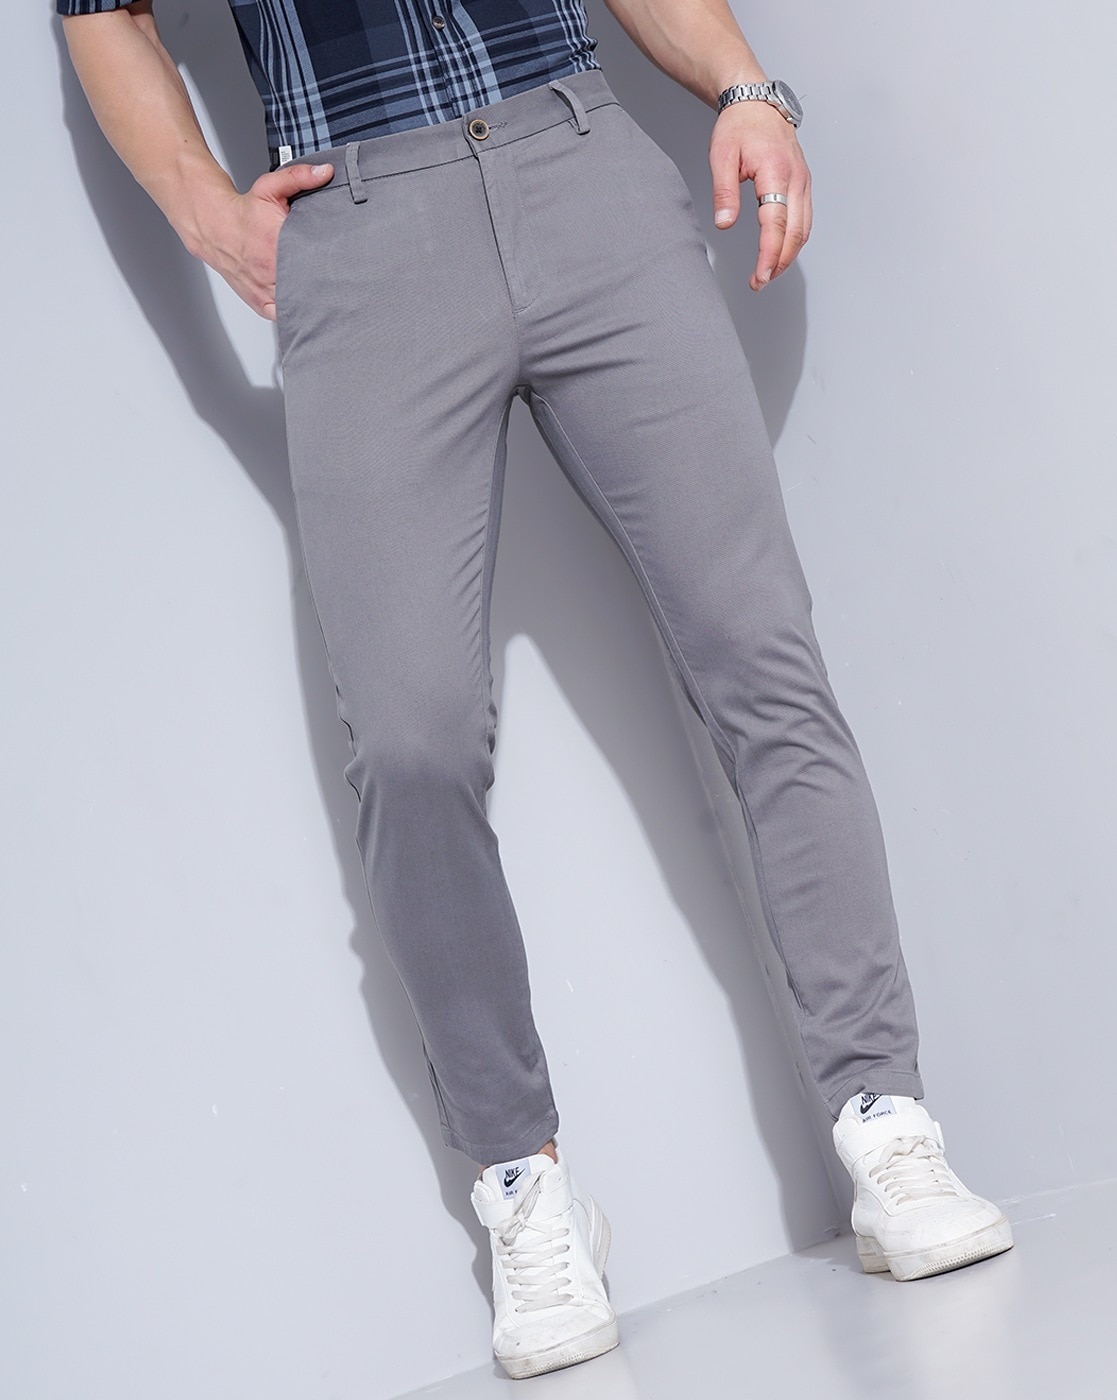 Buy Black Trousers  Pants for Men by British Club Online  Ajiocom